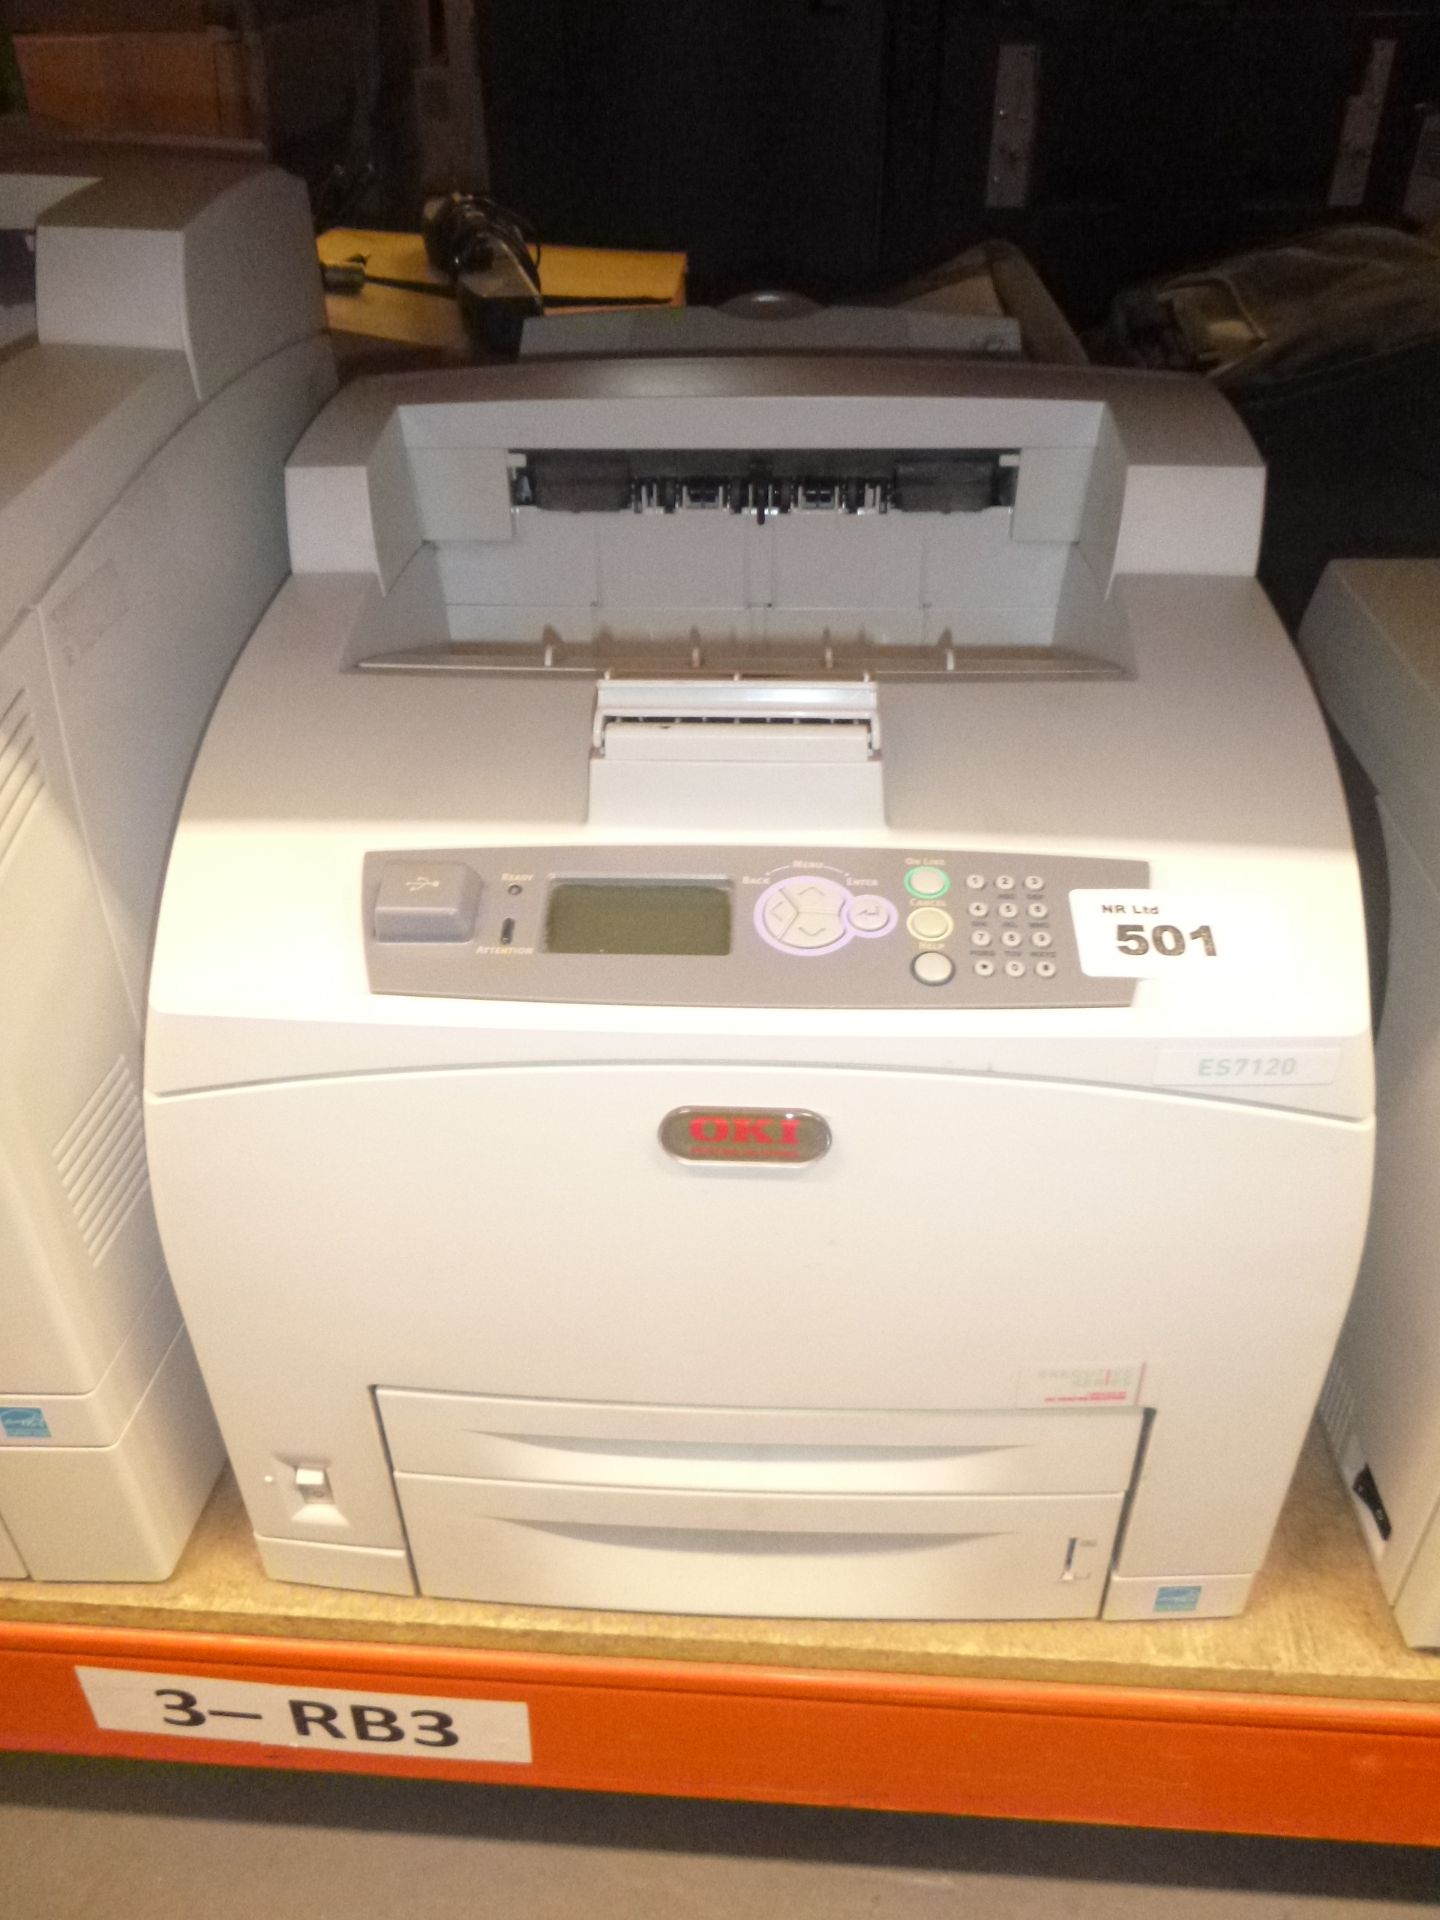 OKI ES7120 NETWORK Laser printer with test print